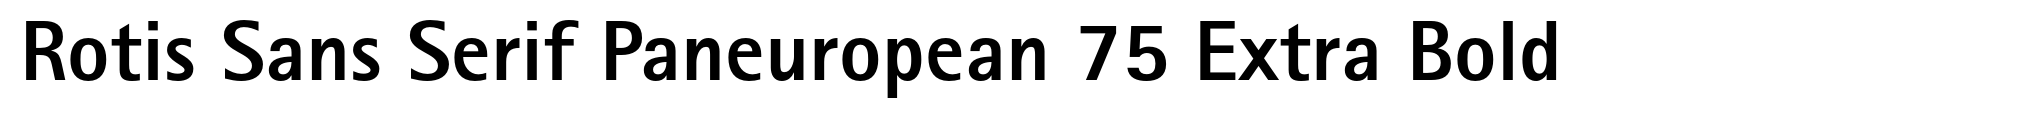 Rotis Sans Serif Paneuropean 75 Extra Bold image